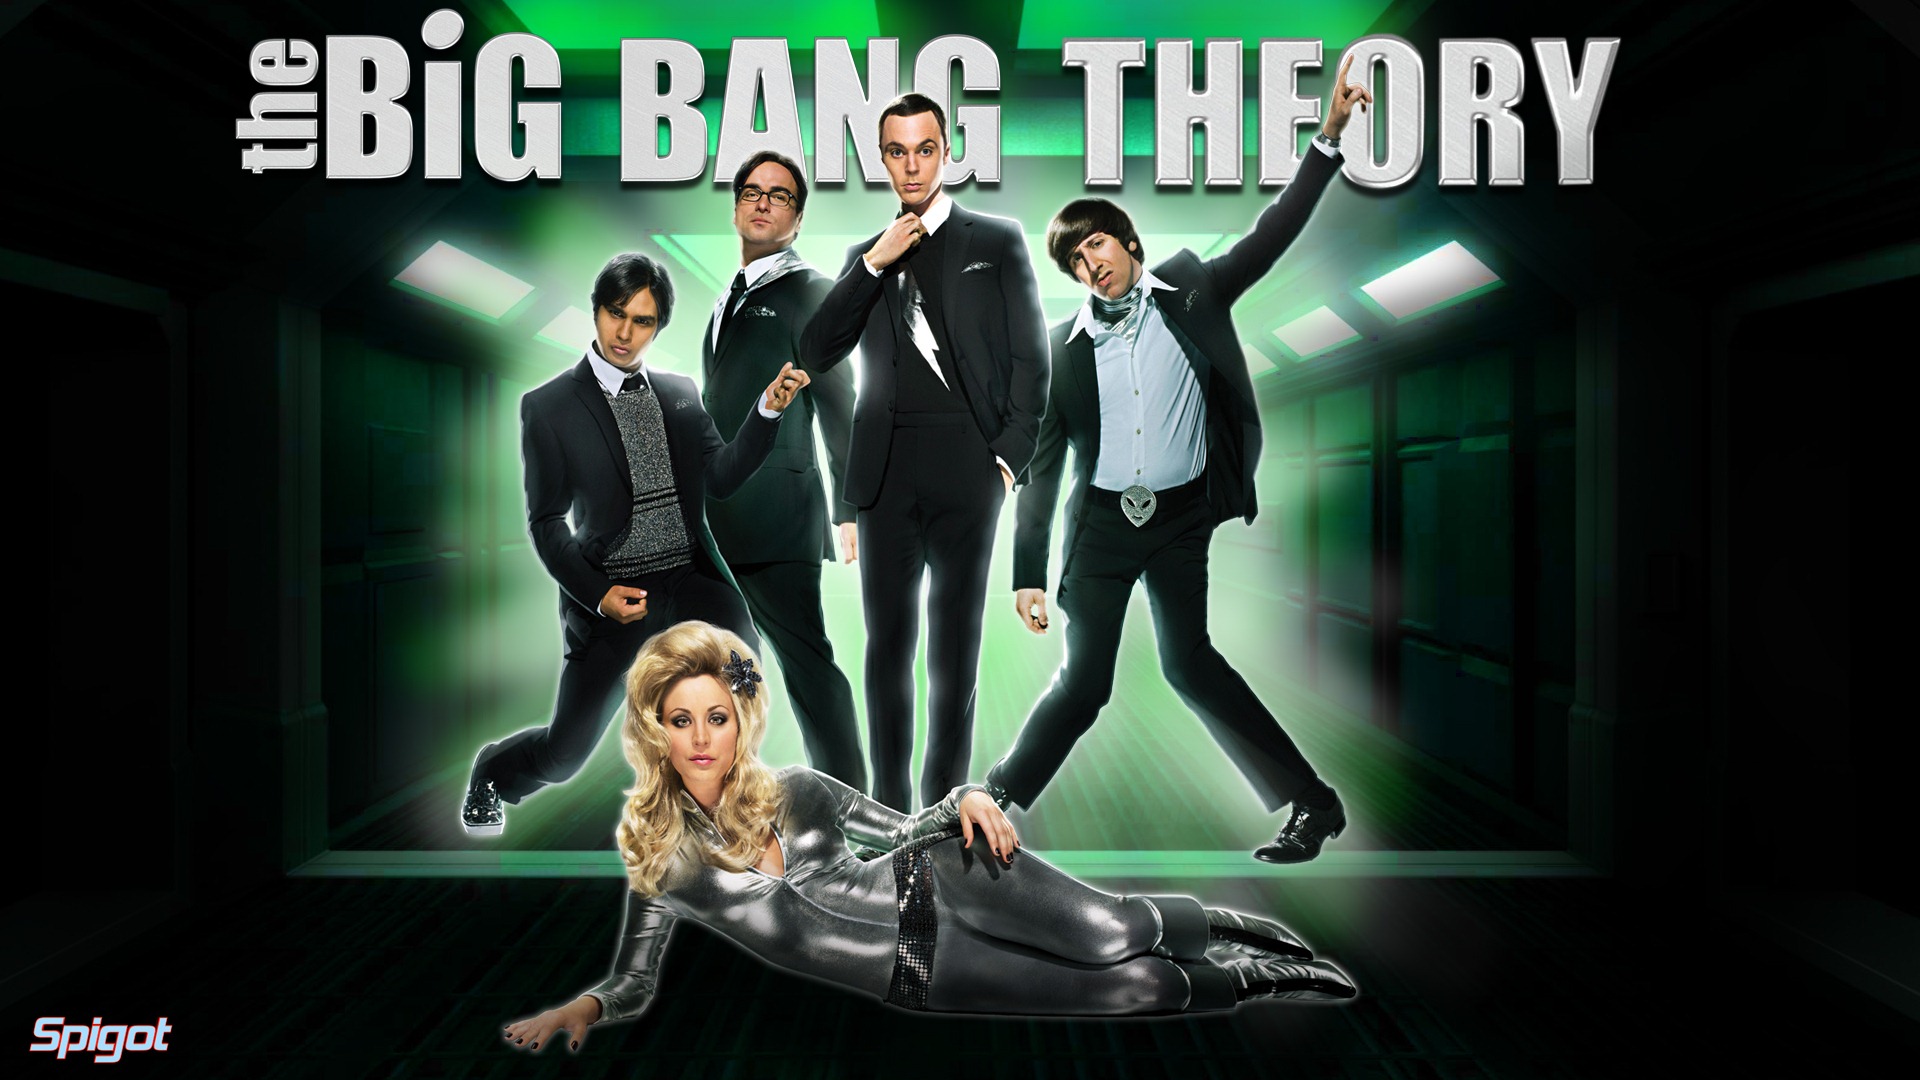 The Big Bang Theory ビッグバン理論TVシリーズHDの壁紙 #6 - 1920x1080